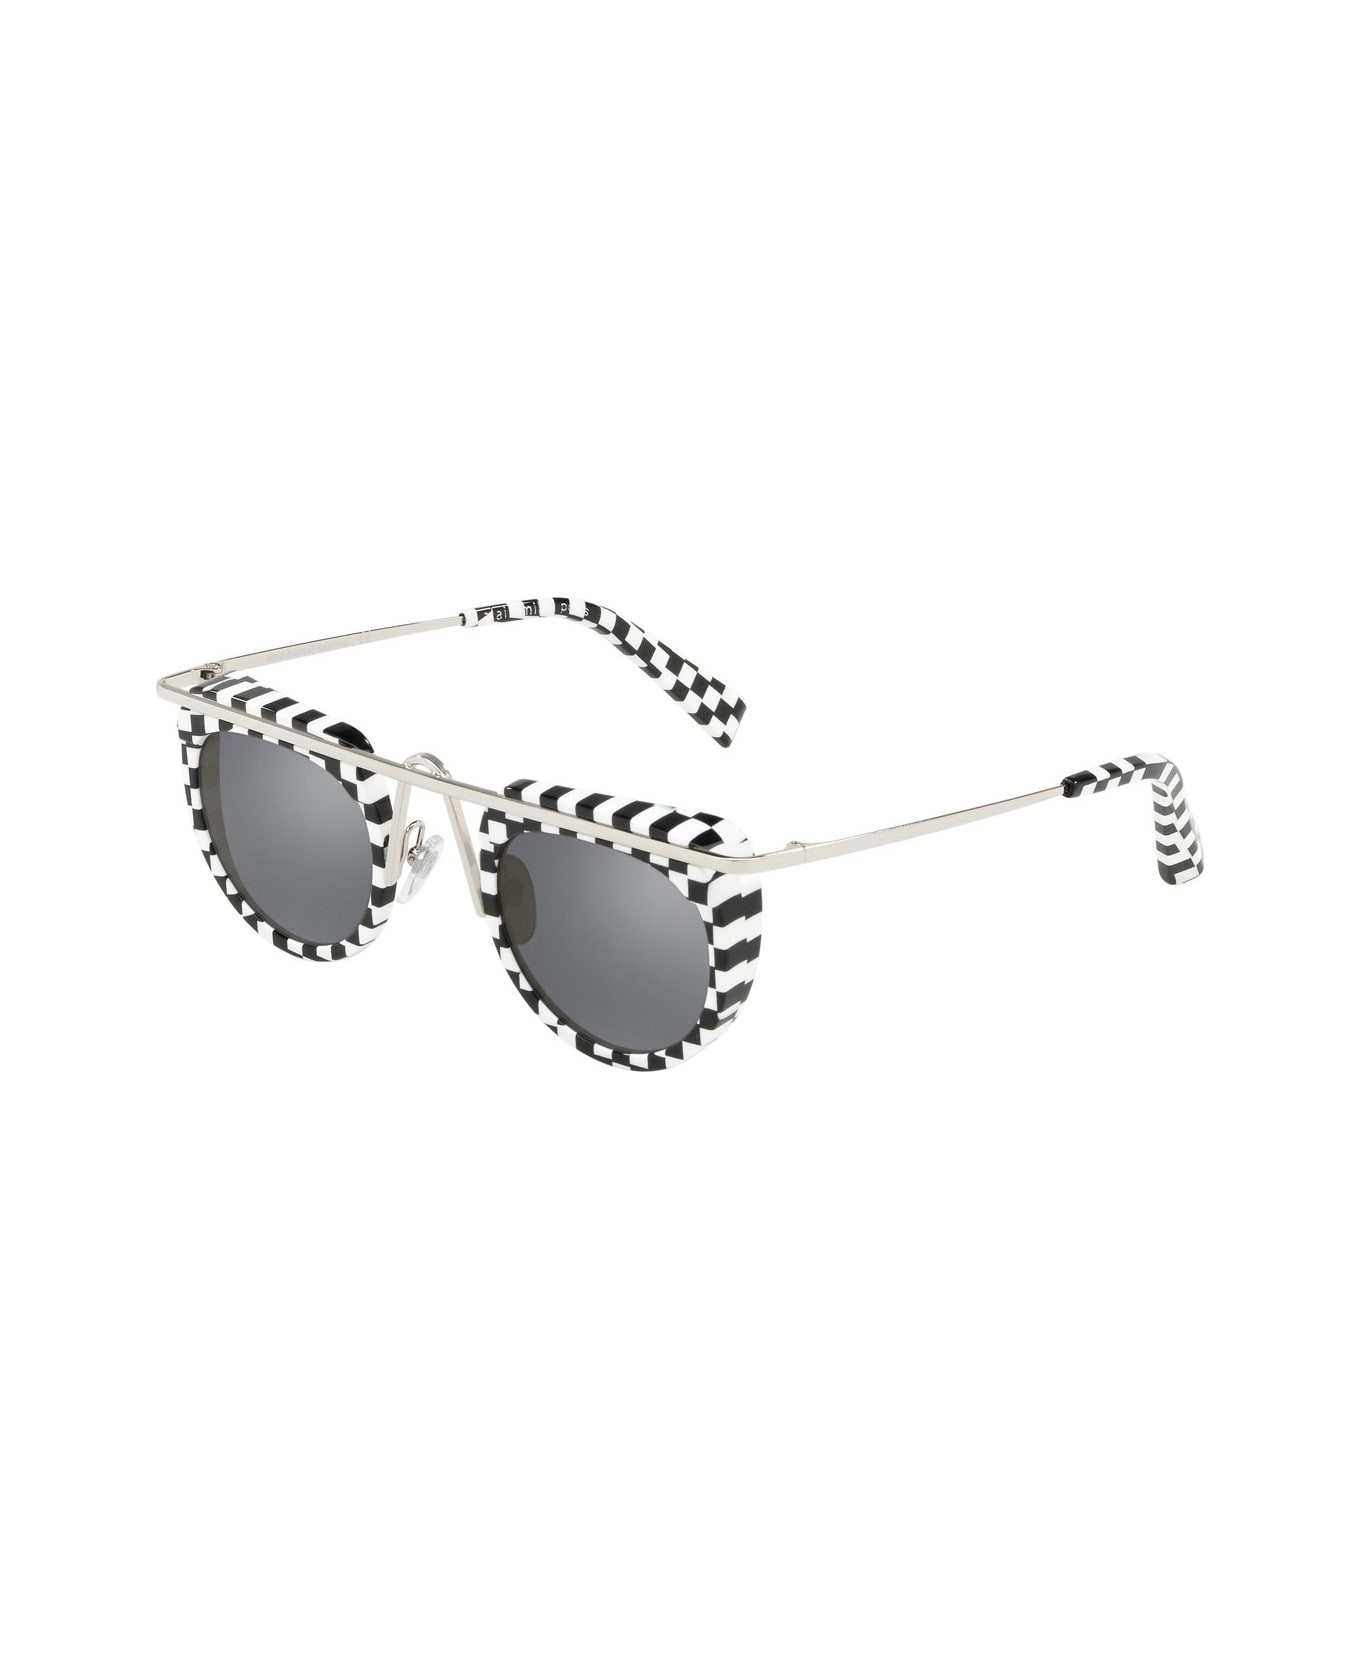 Alain Mikli 0a04011 Pro Sunglasses - Bianco